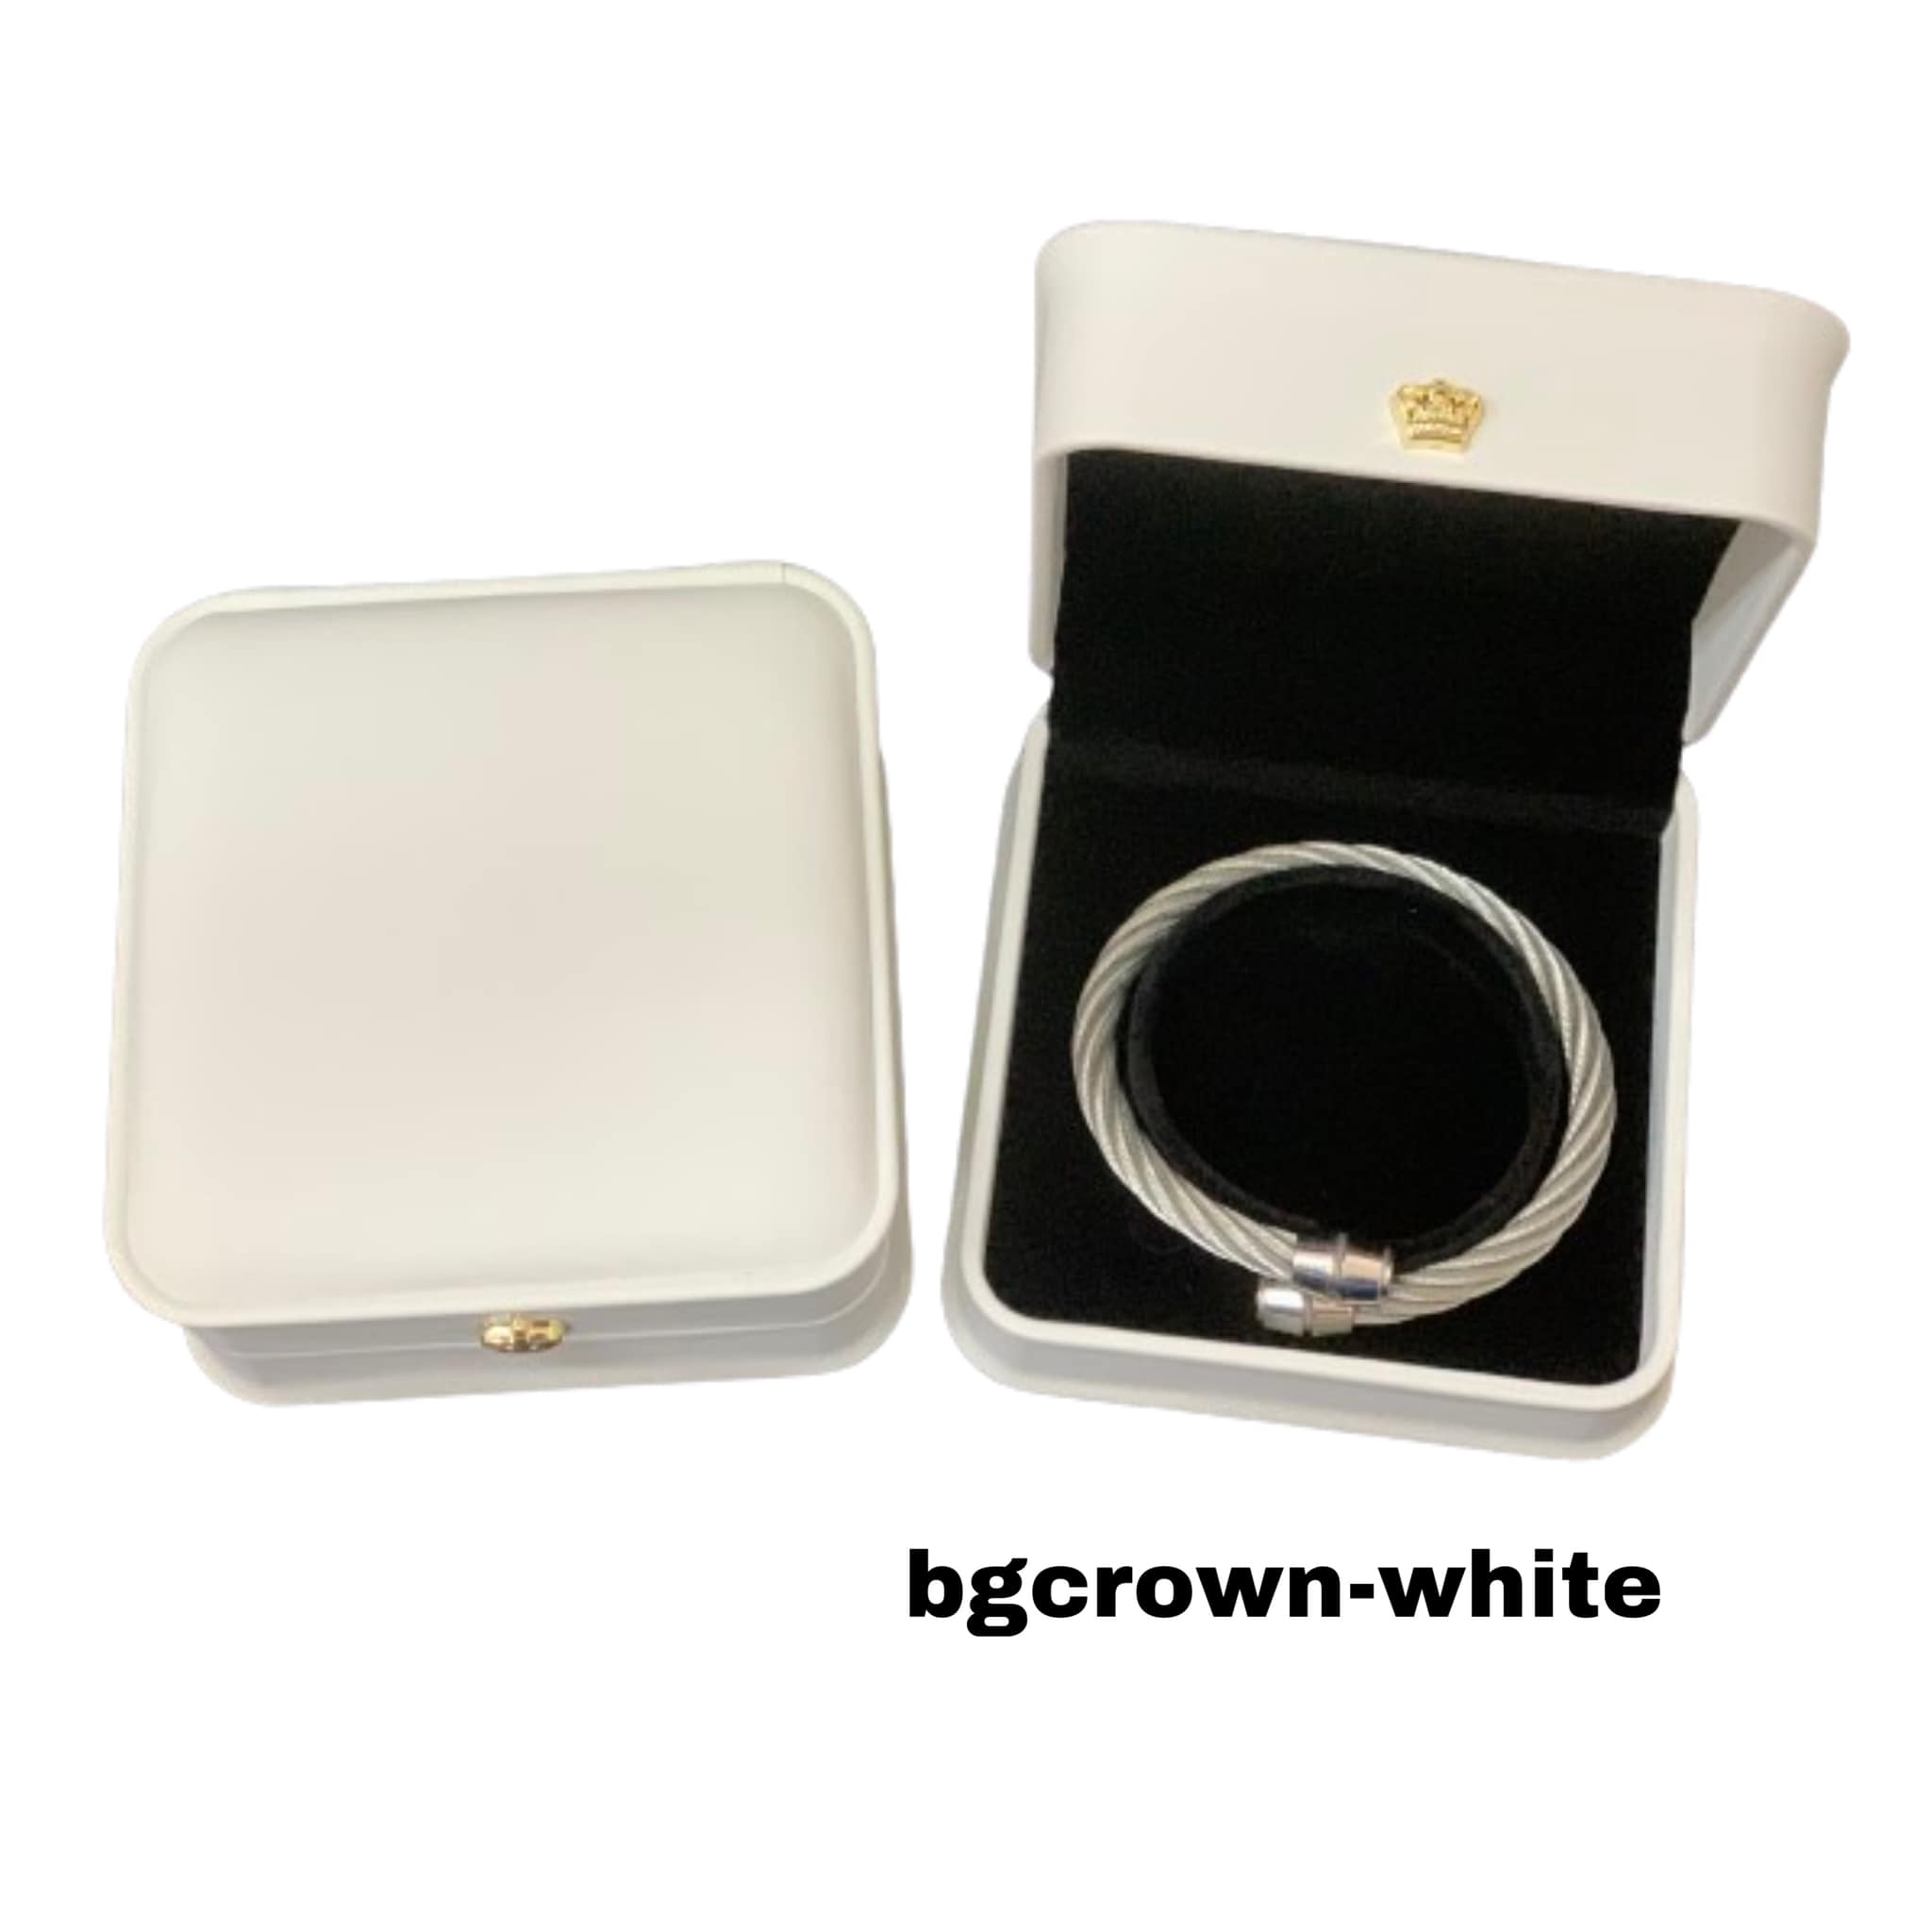 bgcrown-white